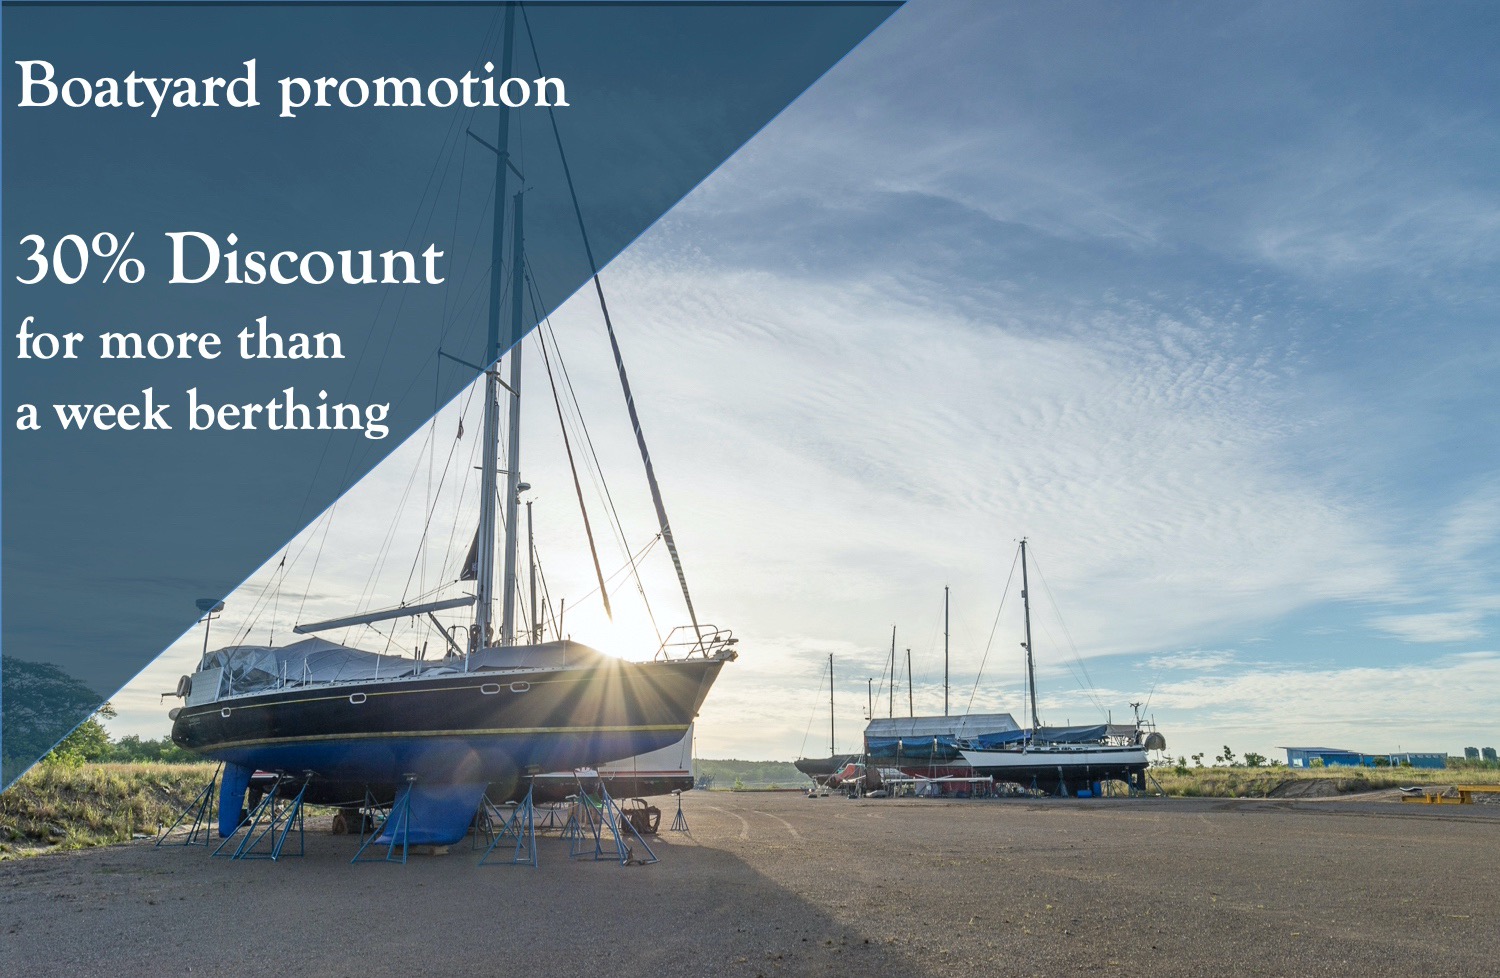 Boatyard promotion